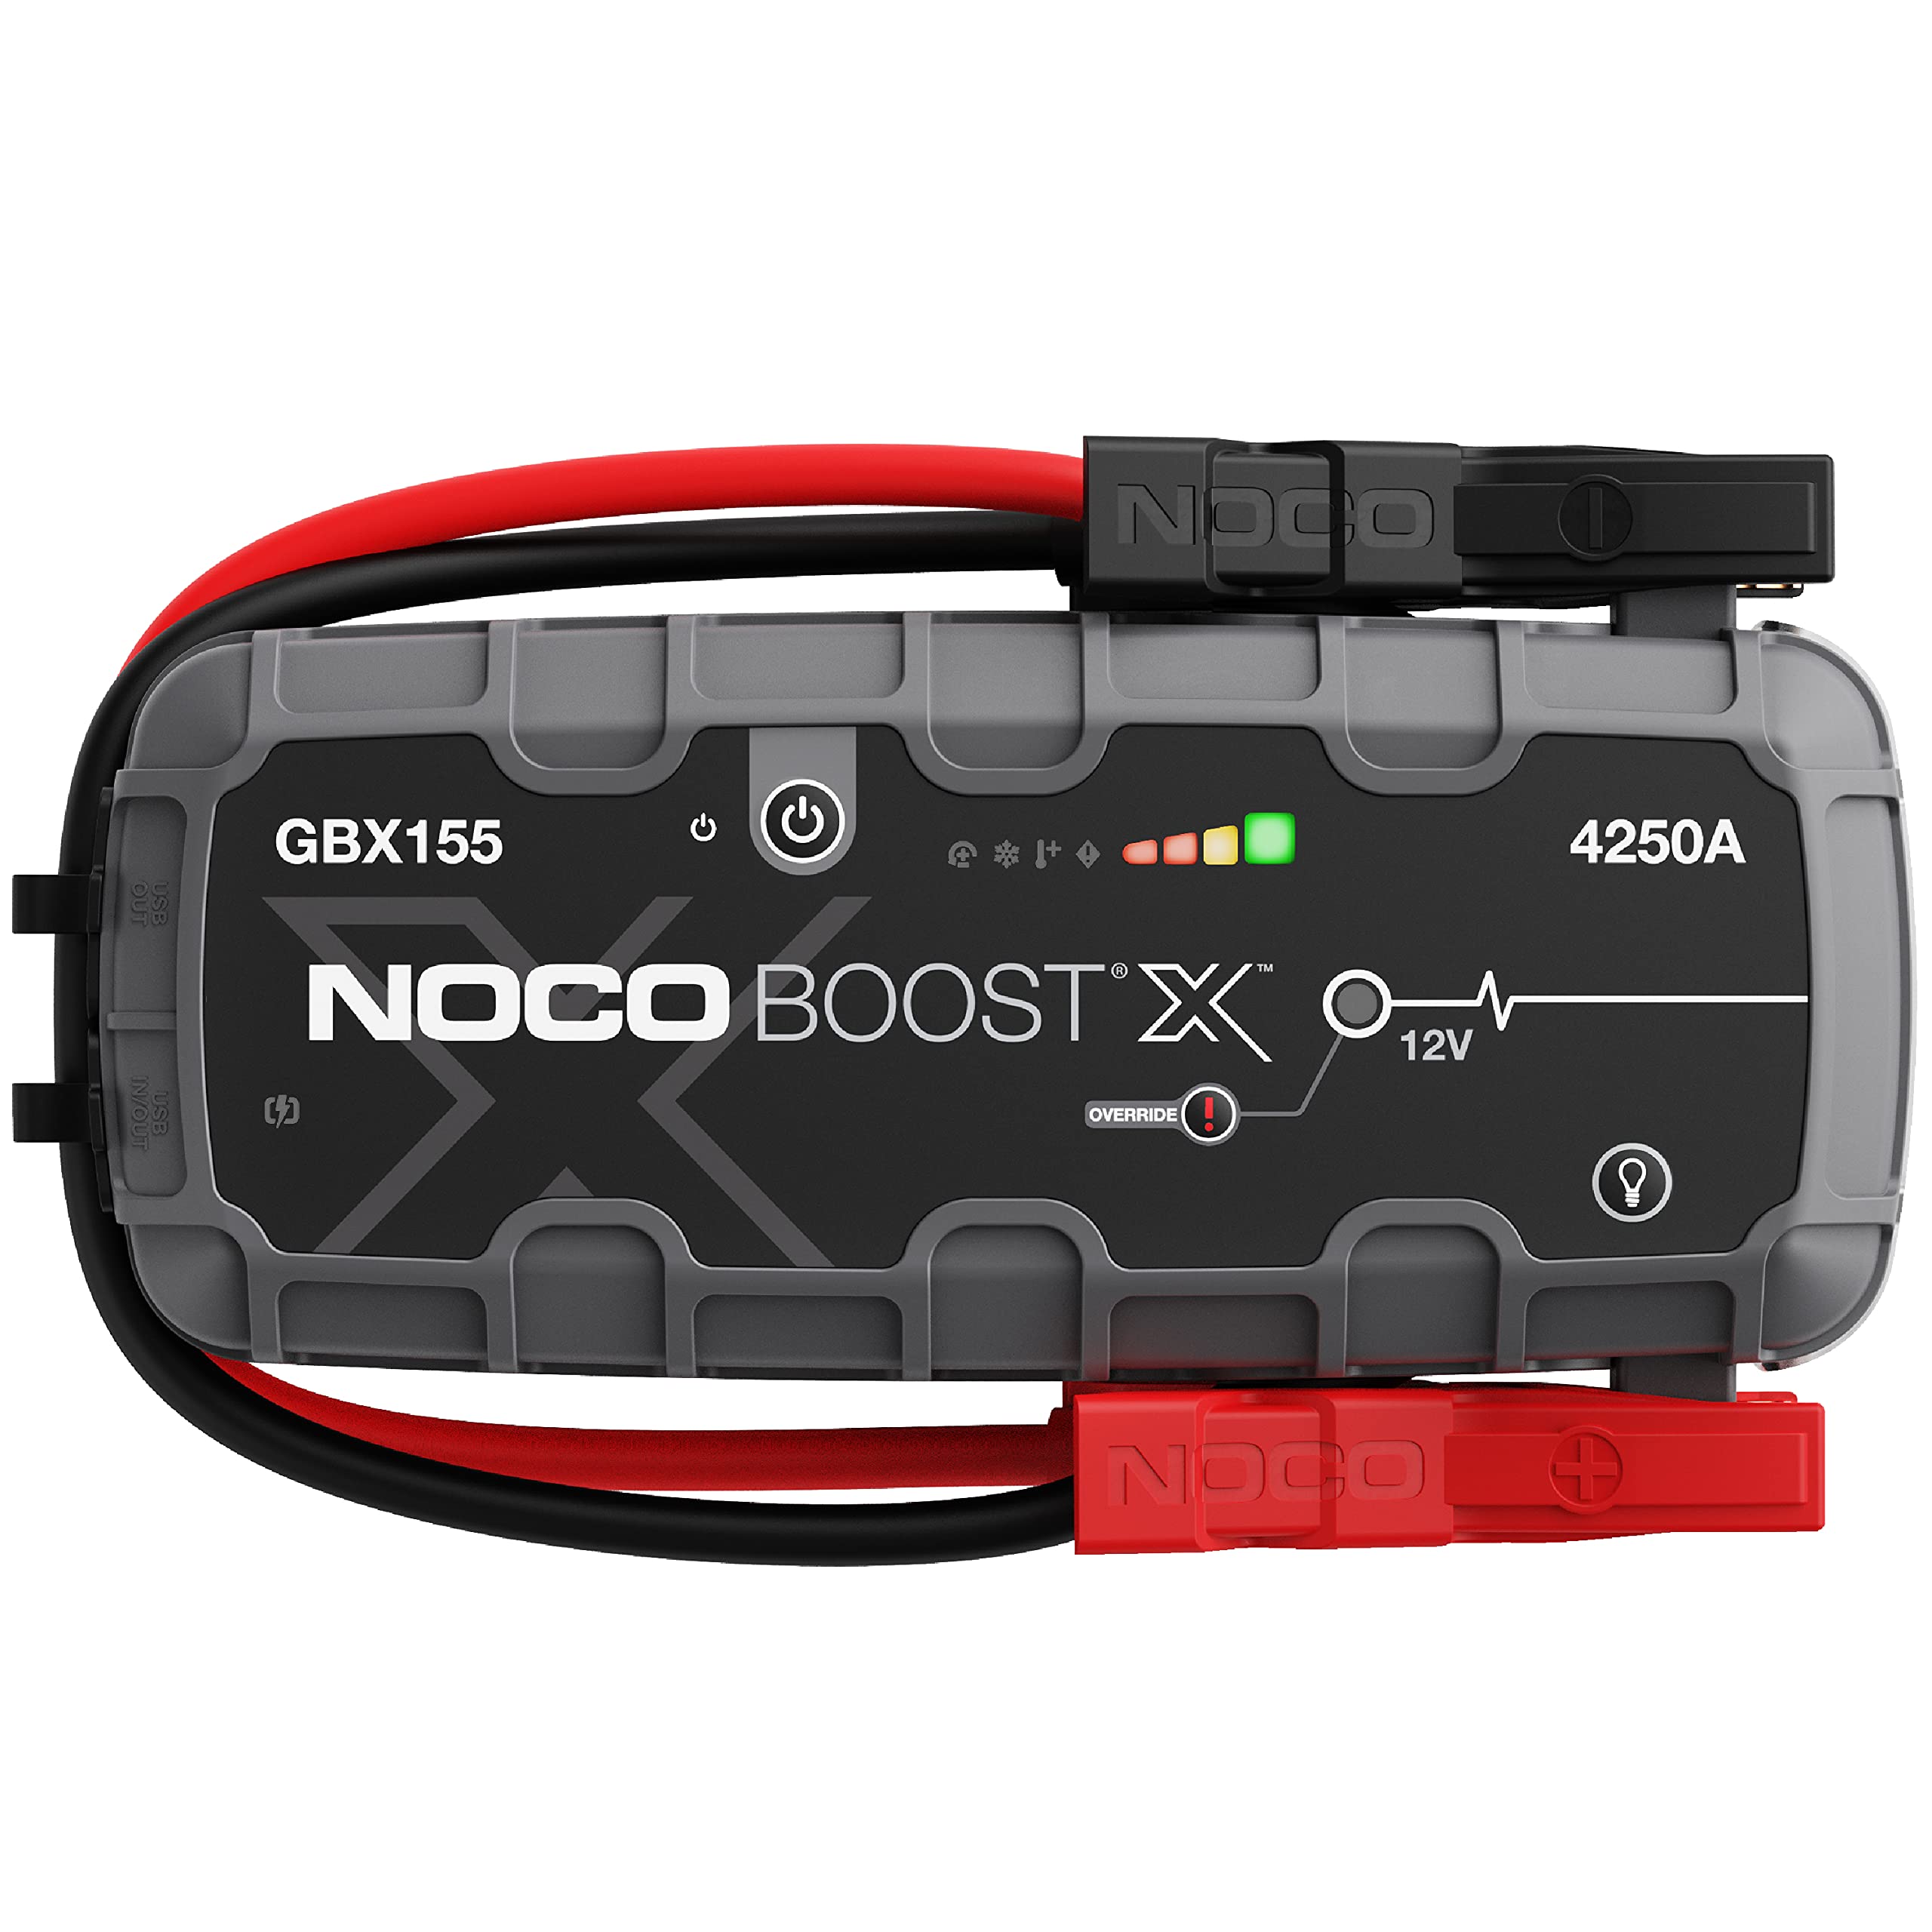 NOCO Boost X GBX155 4250A 12V UltraSafe Portable Lithiu...